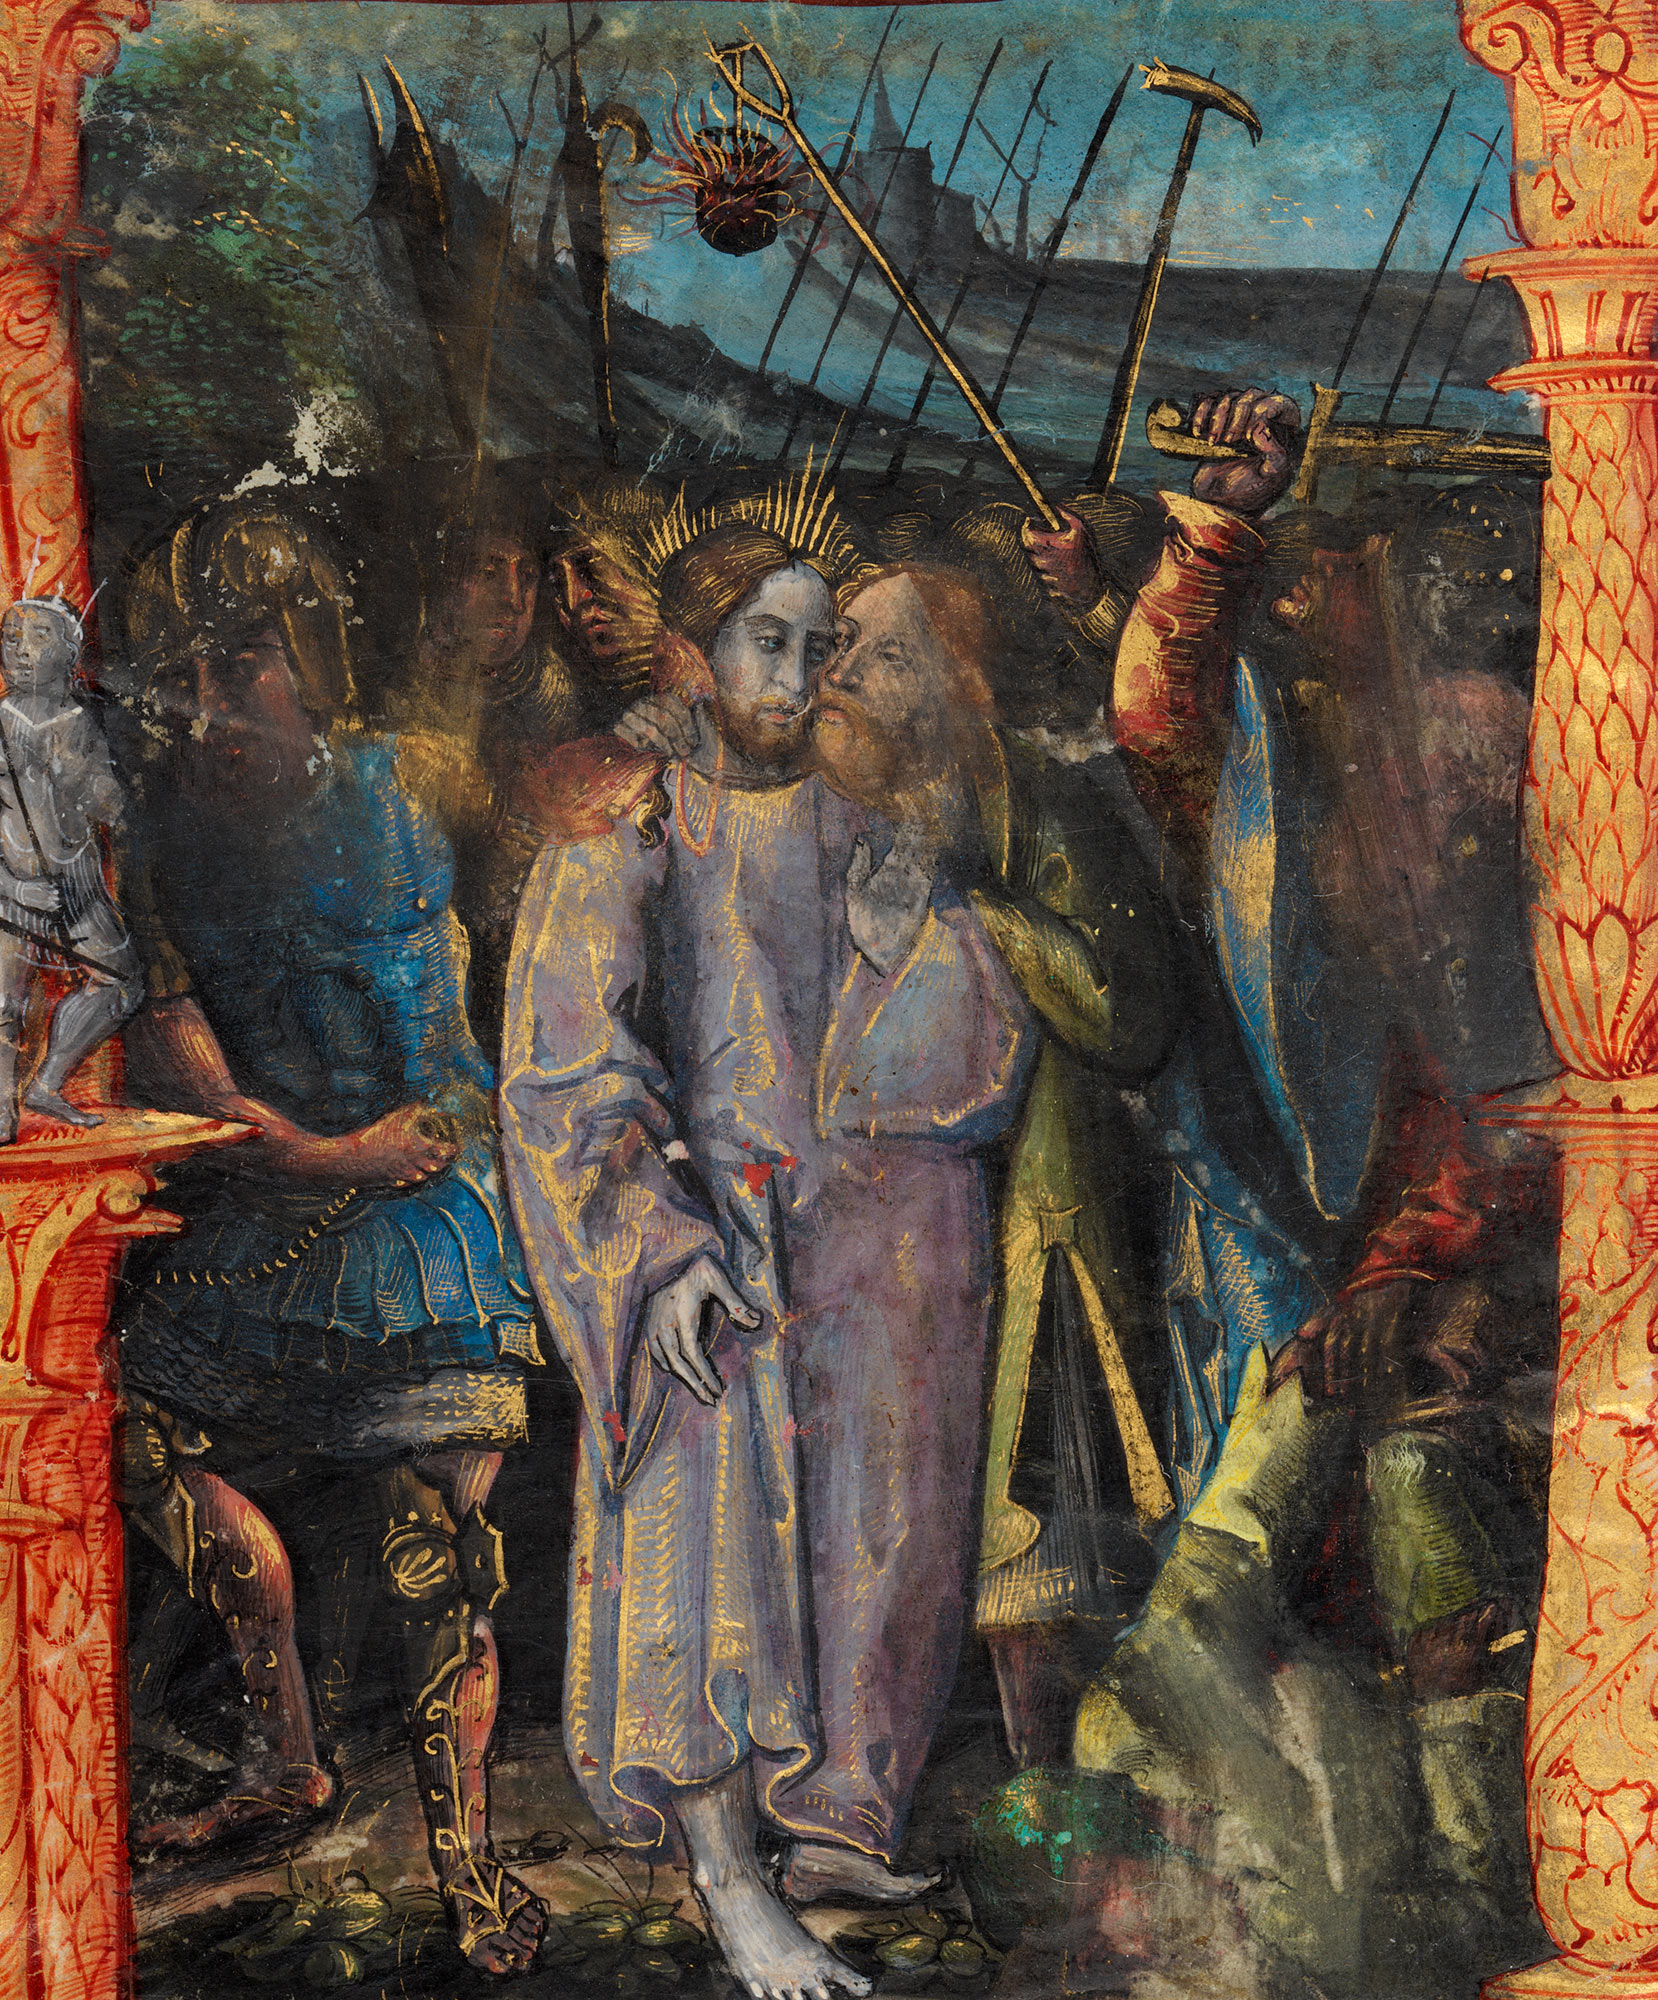 An illumination depicting a religious, Christian scene.